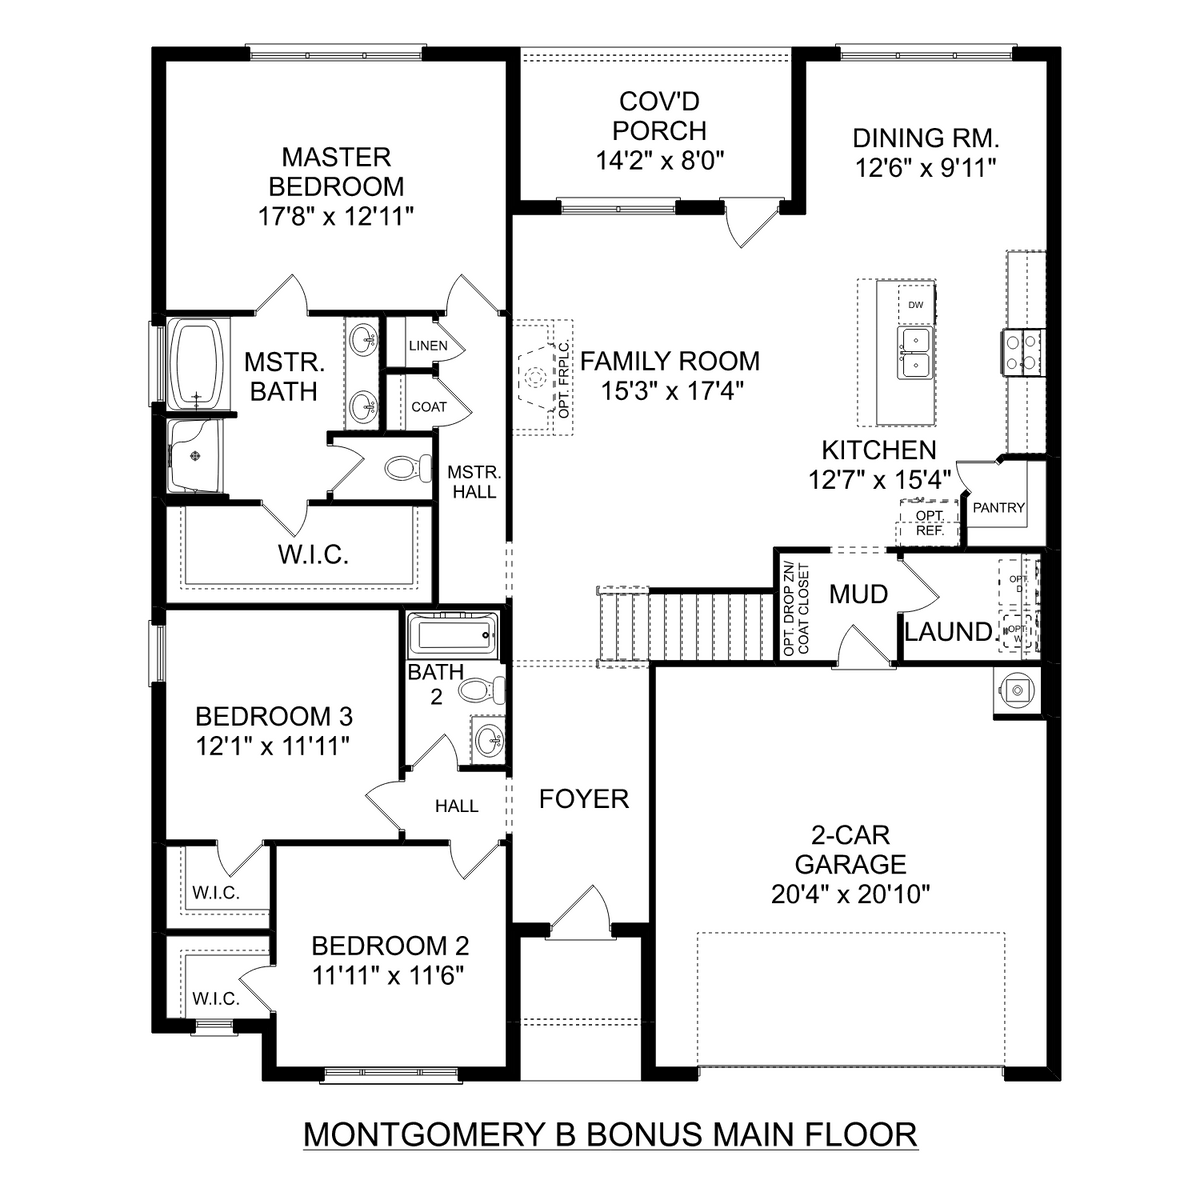 1 - The Montgomery B With Bonus buildable floor plan layout in Davidson Homes' North Ridge community.